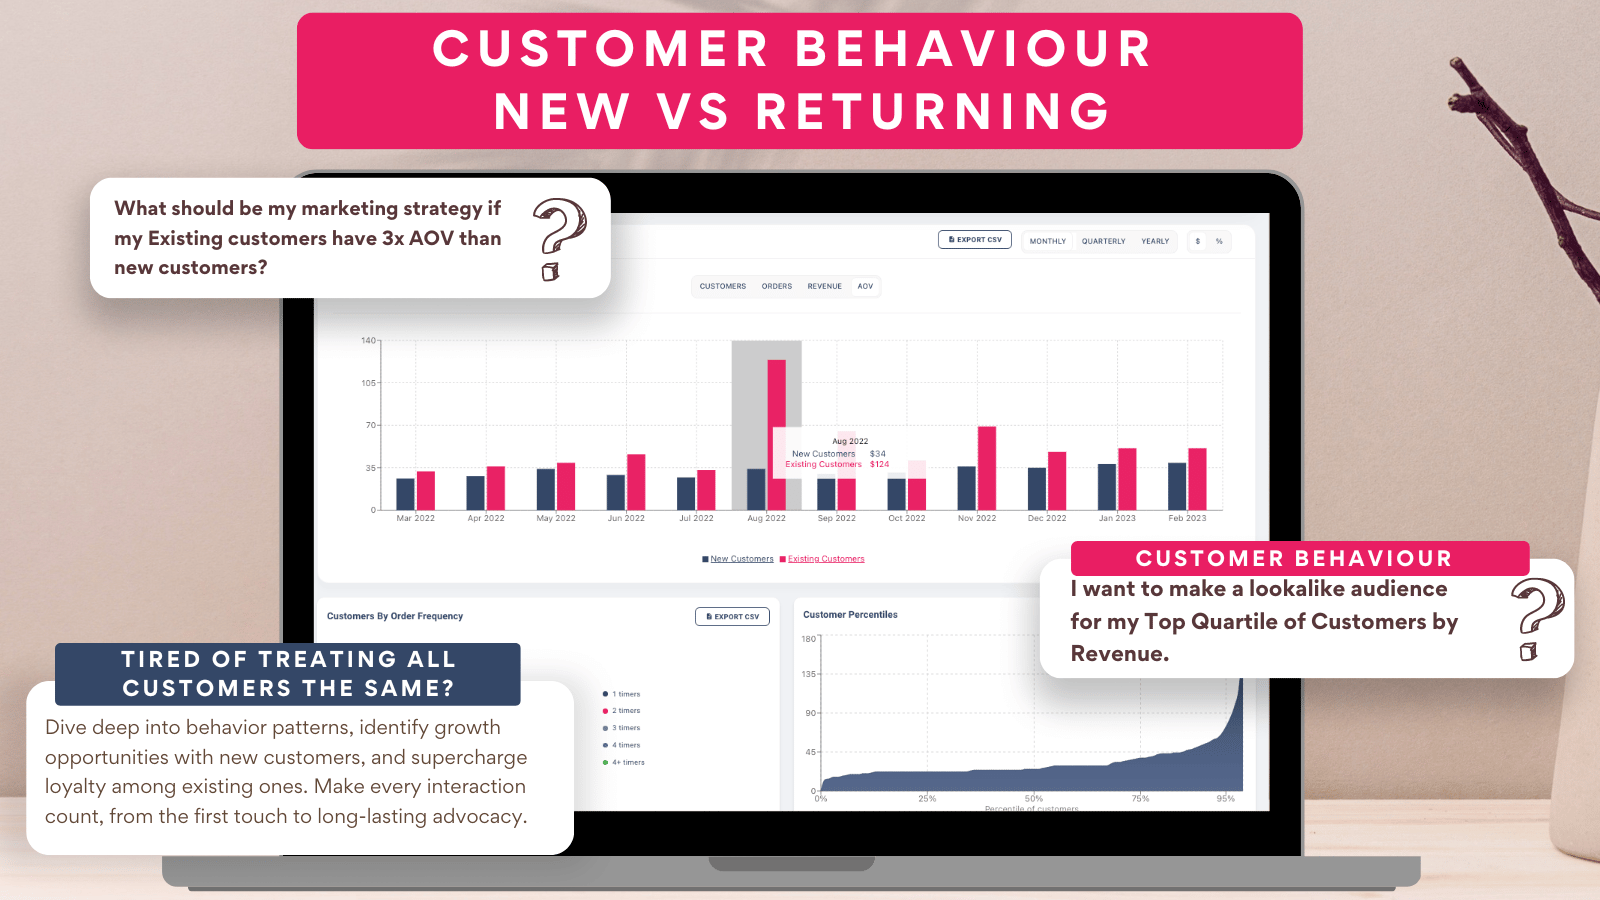 New vs Returning customers and customer Quartiles - In-depth